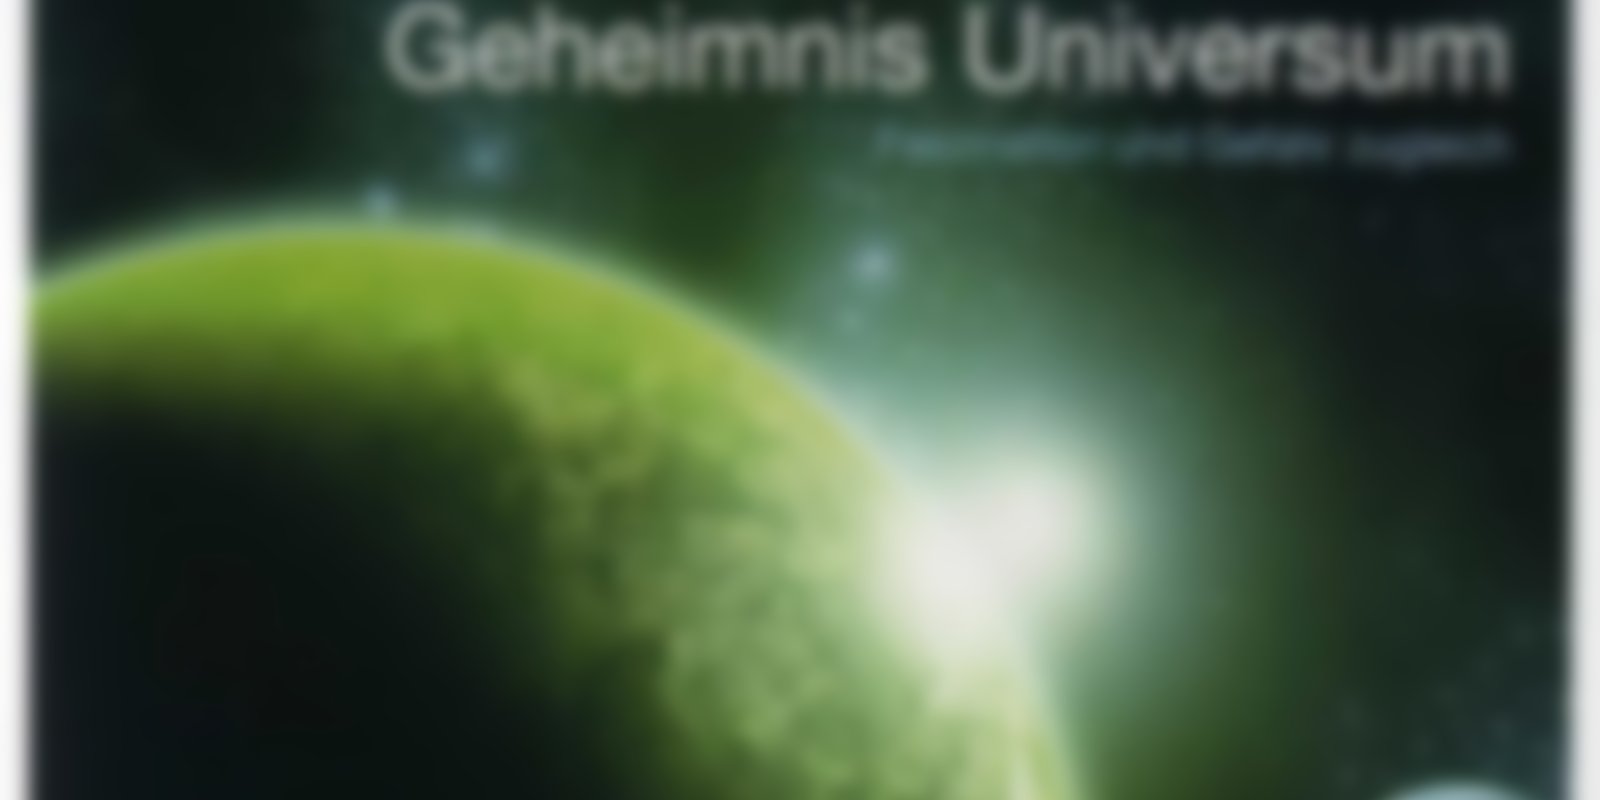 Planet Science - Geheimnis Universum